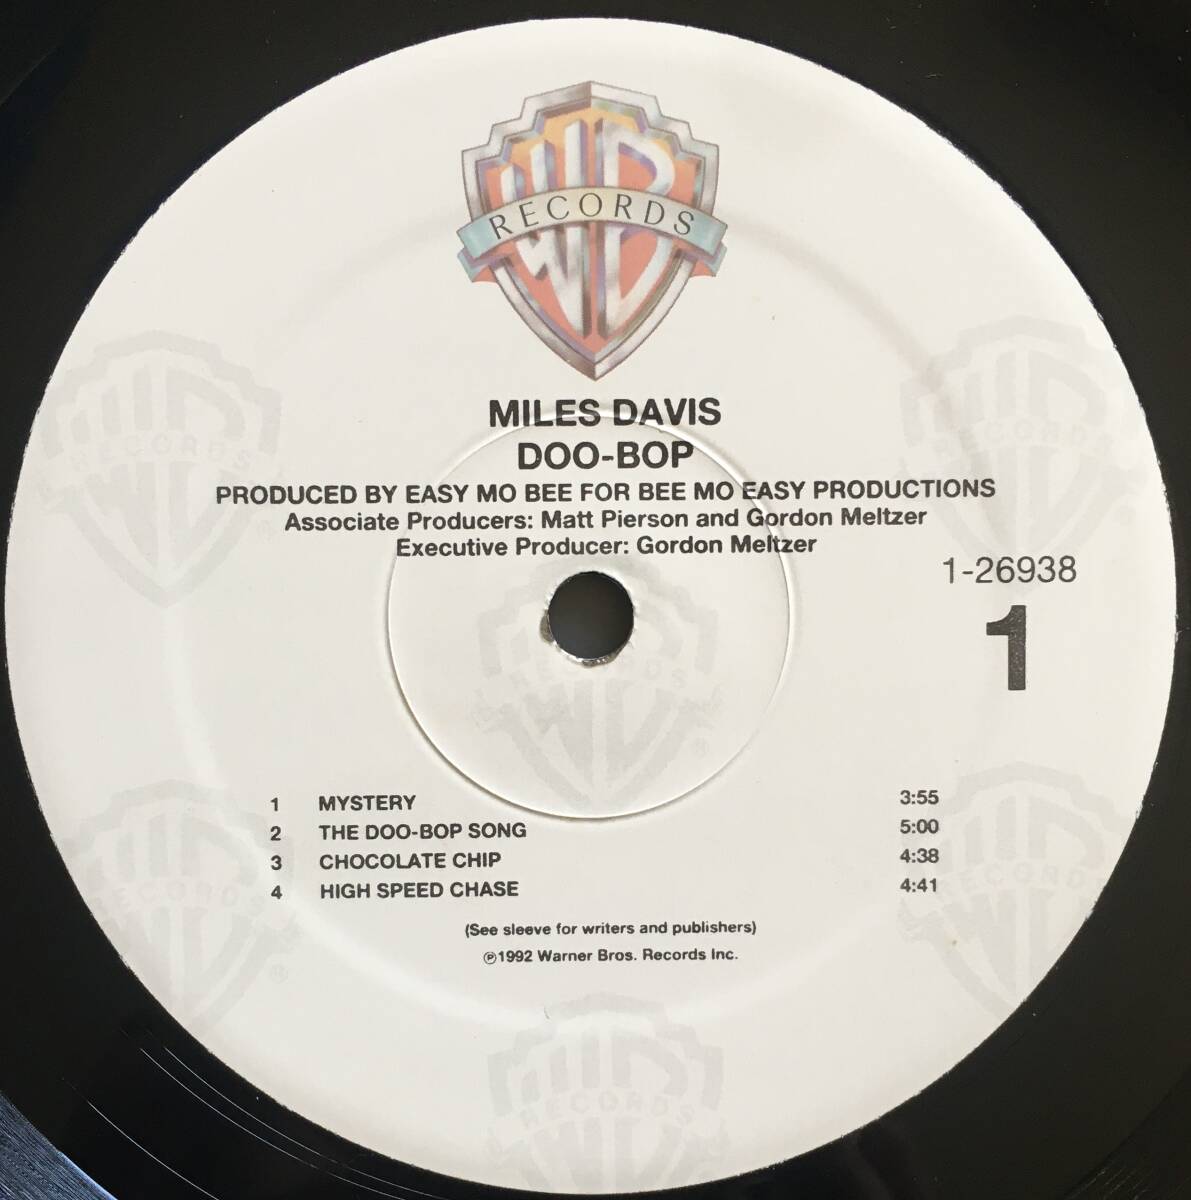 LP★Miles Davis / Doo-Bop 美盤 シュリンク付き 1992年 USオリジナル盤 Warner Bros 9 26938-1,1-26938 _画像6